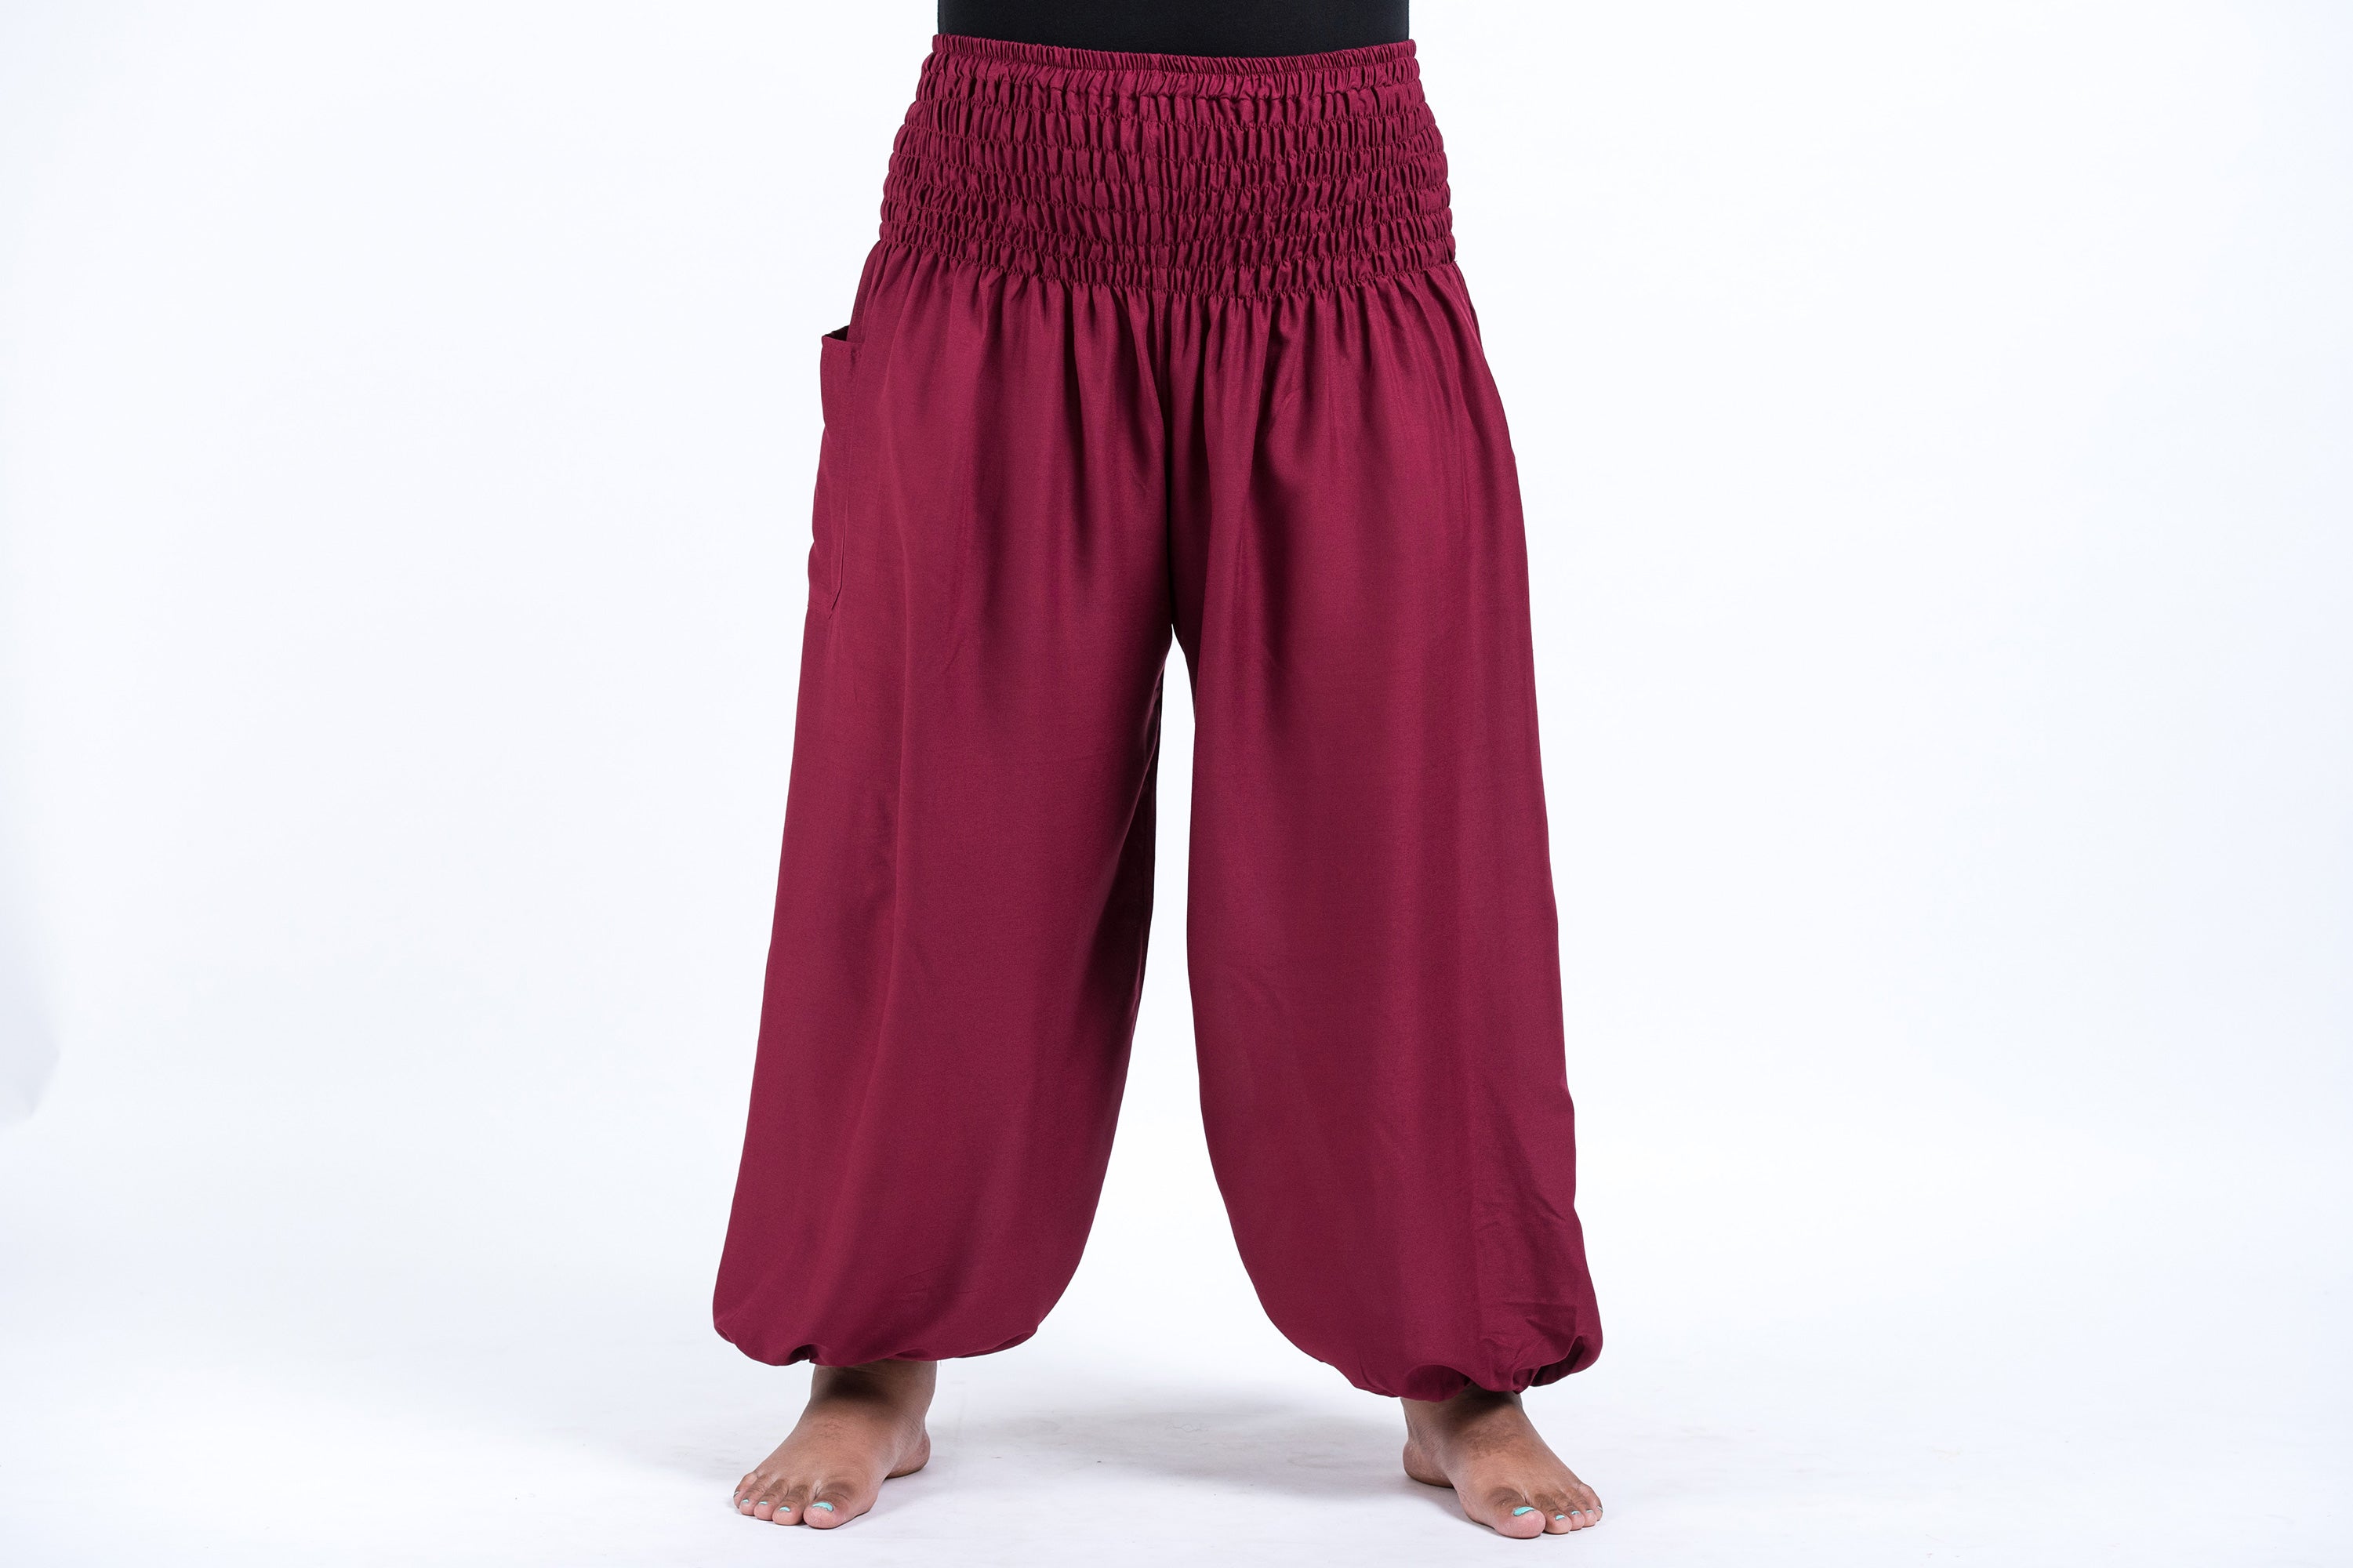 Solid Color Comfy Balloon Pants Linen Harem Pants for Senior Women in  Burgundy Black One Size